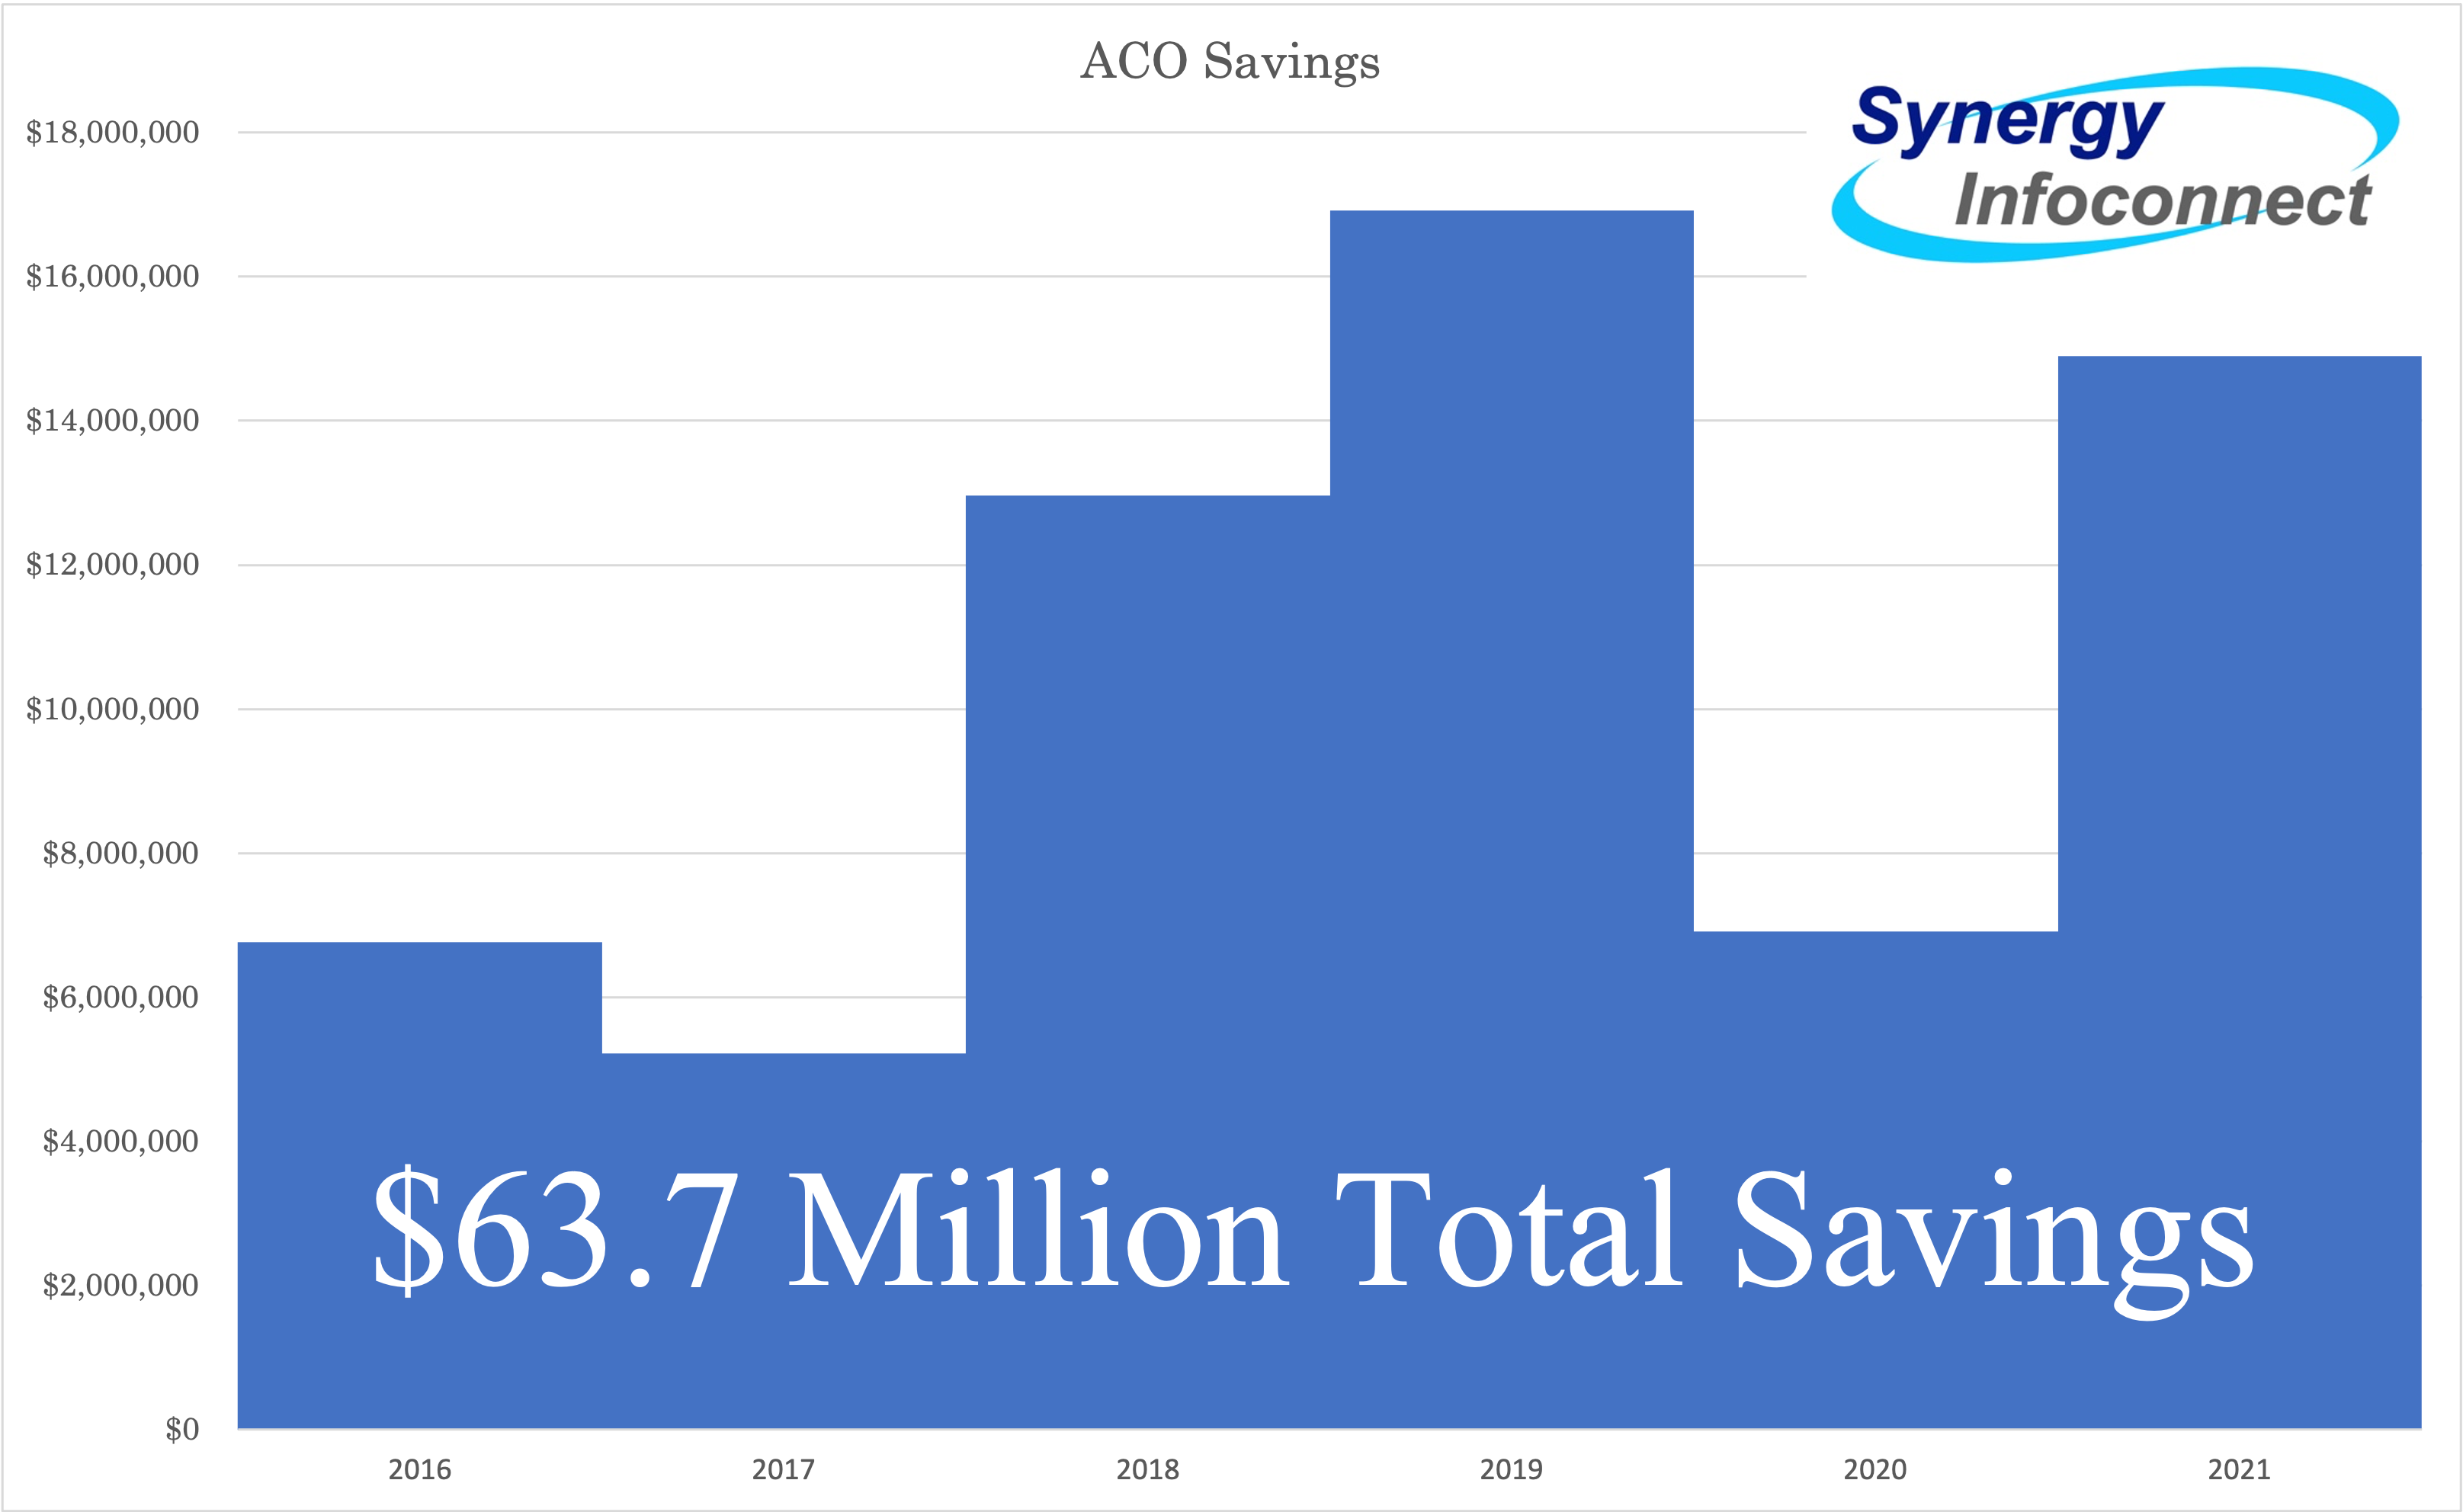 Synergy's affiliated ACO Savings